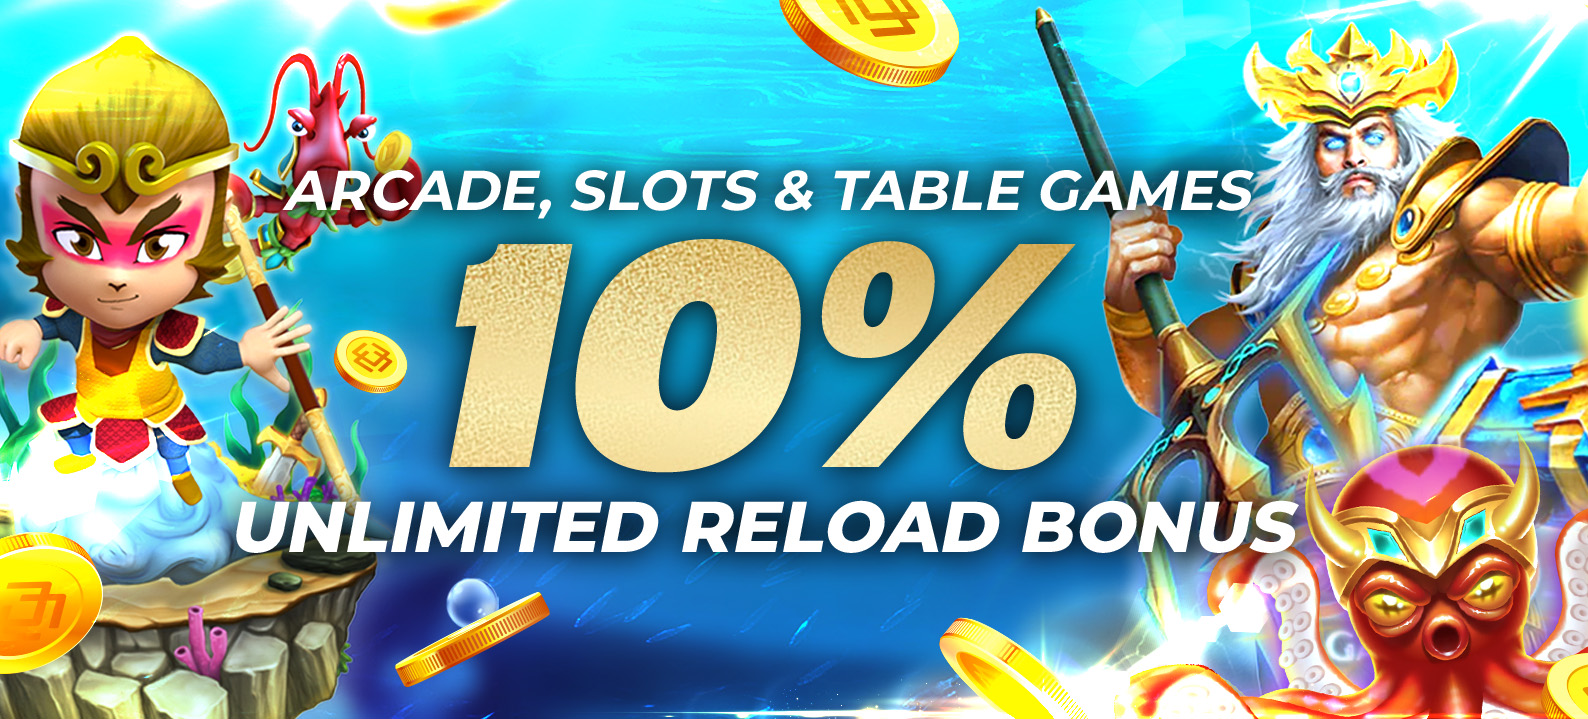 Arcade, Slots & Table Games 10% Unlimited Reload Bonus